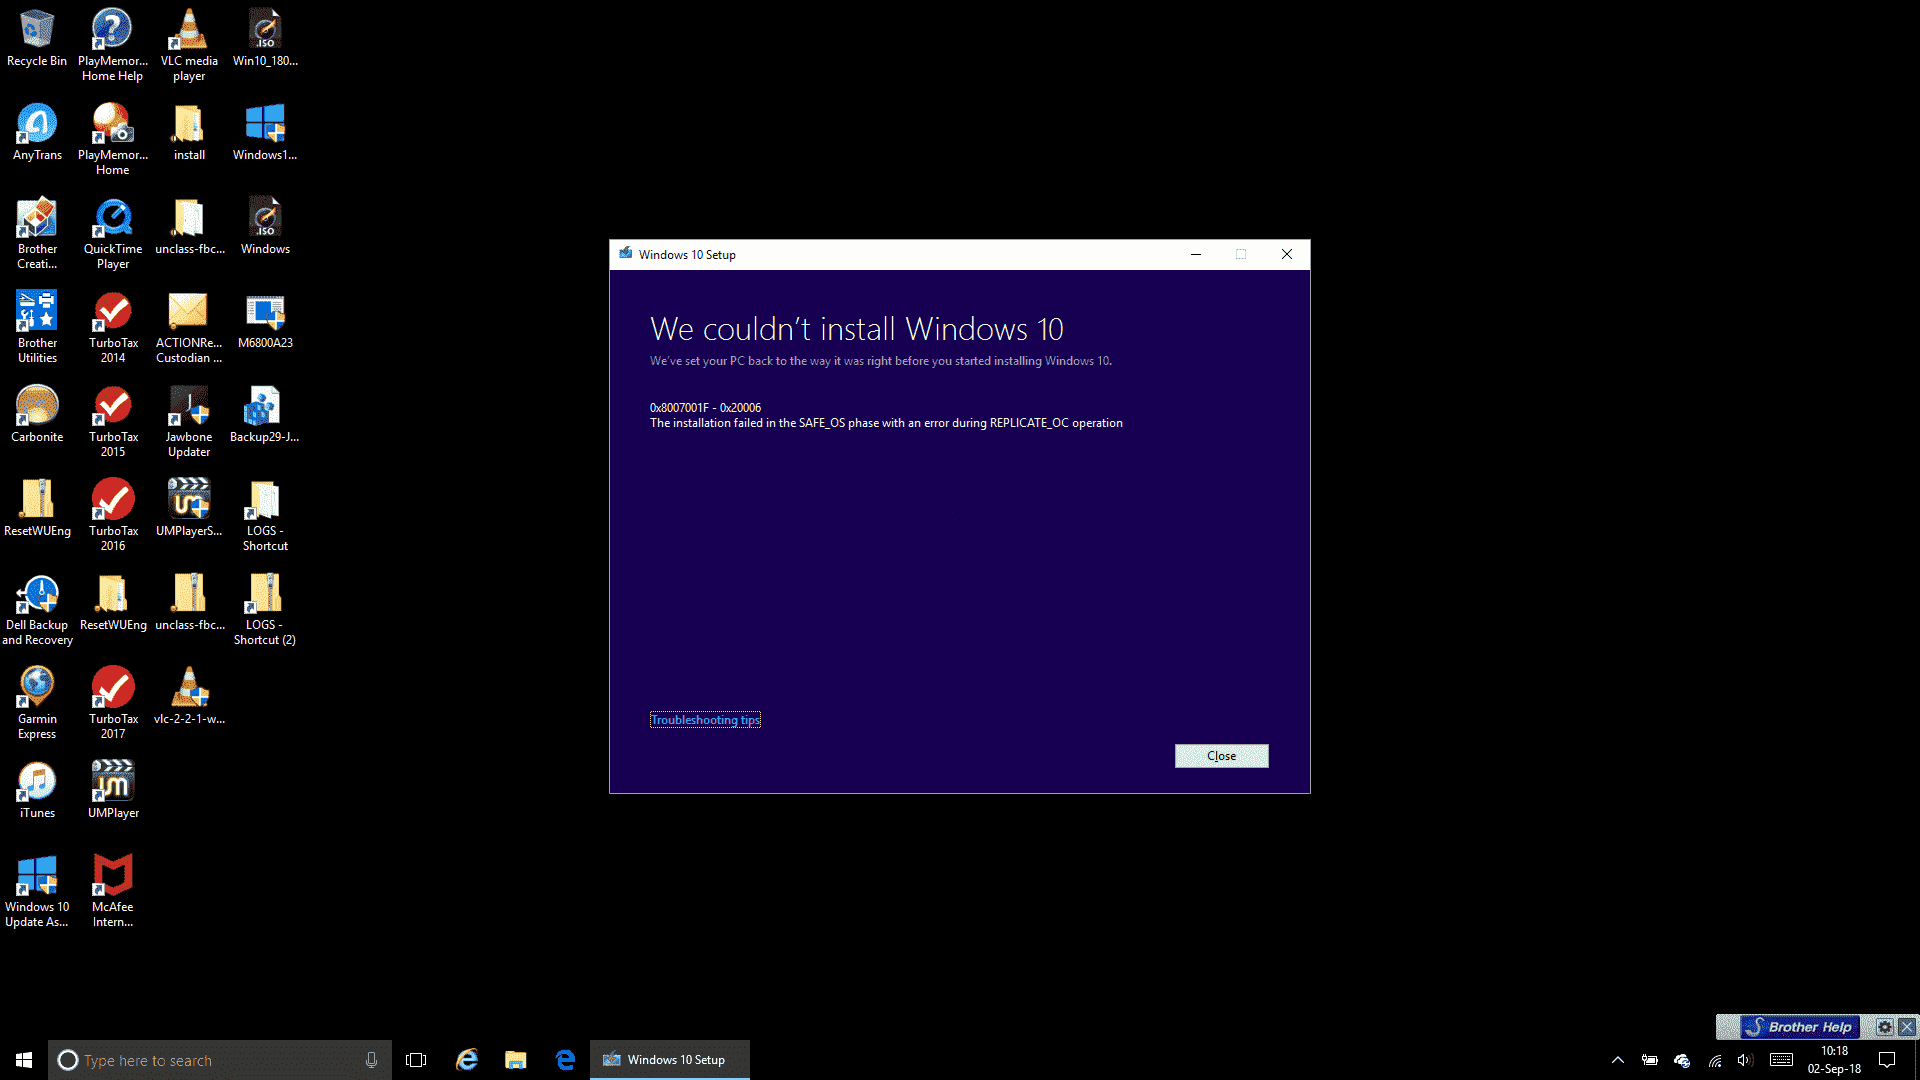 Error Message when Upgrading Windows 10 from 1607 to 1803 68bd7900-e6d7-4a5e-bca8-2e66dfc659d5?upload=true.png